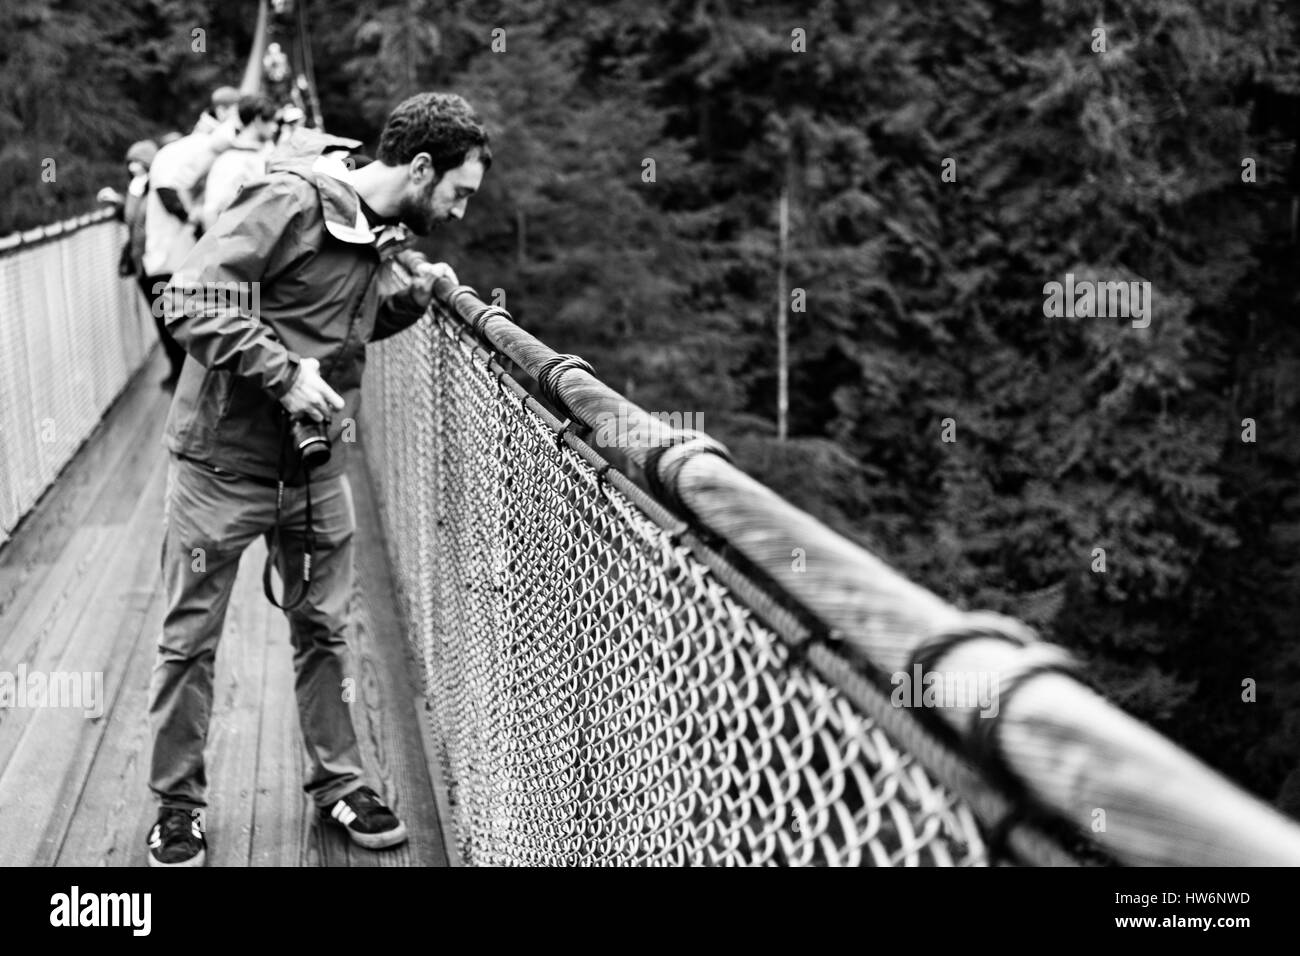 Looking over the edge of Capsilano suspension bridge in Vancouver, Canada. Stock Photo